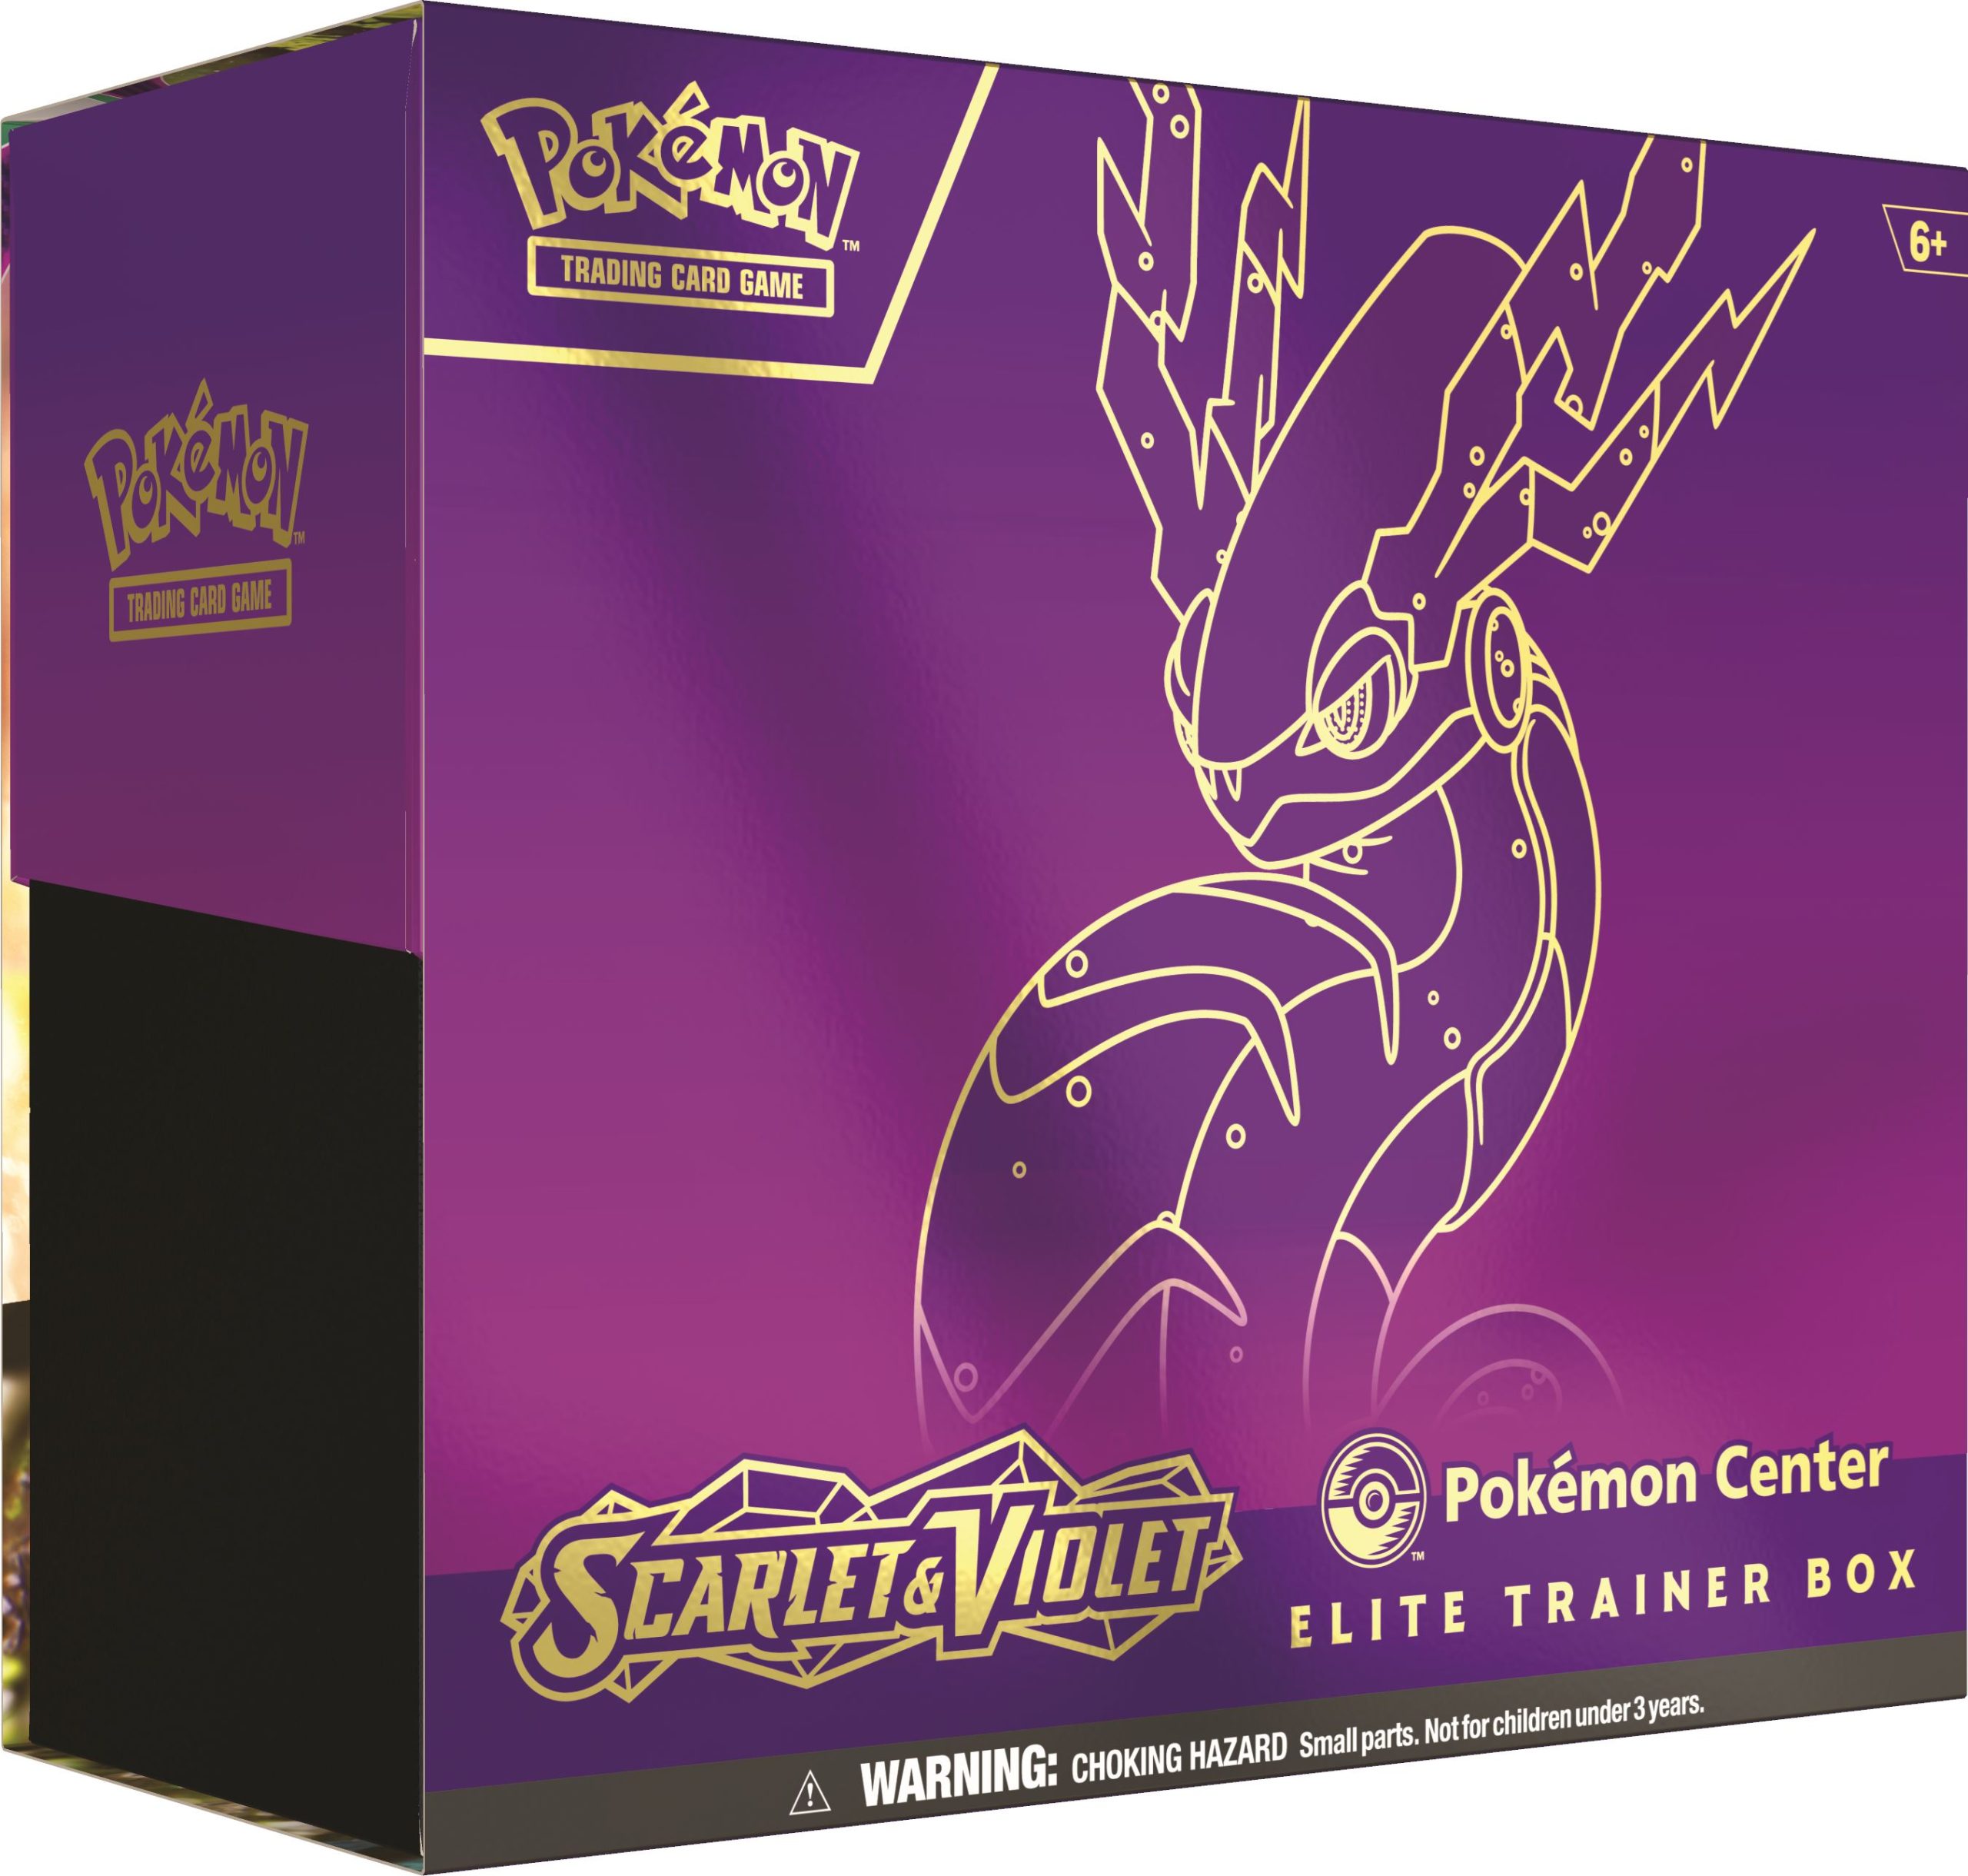 Pokémon TCG: Scarlet & Violet Elite Trainer Box Review •